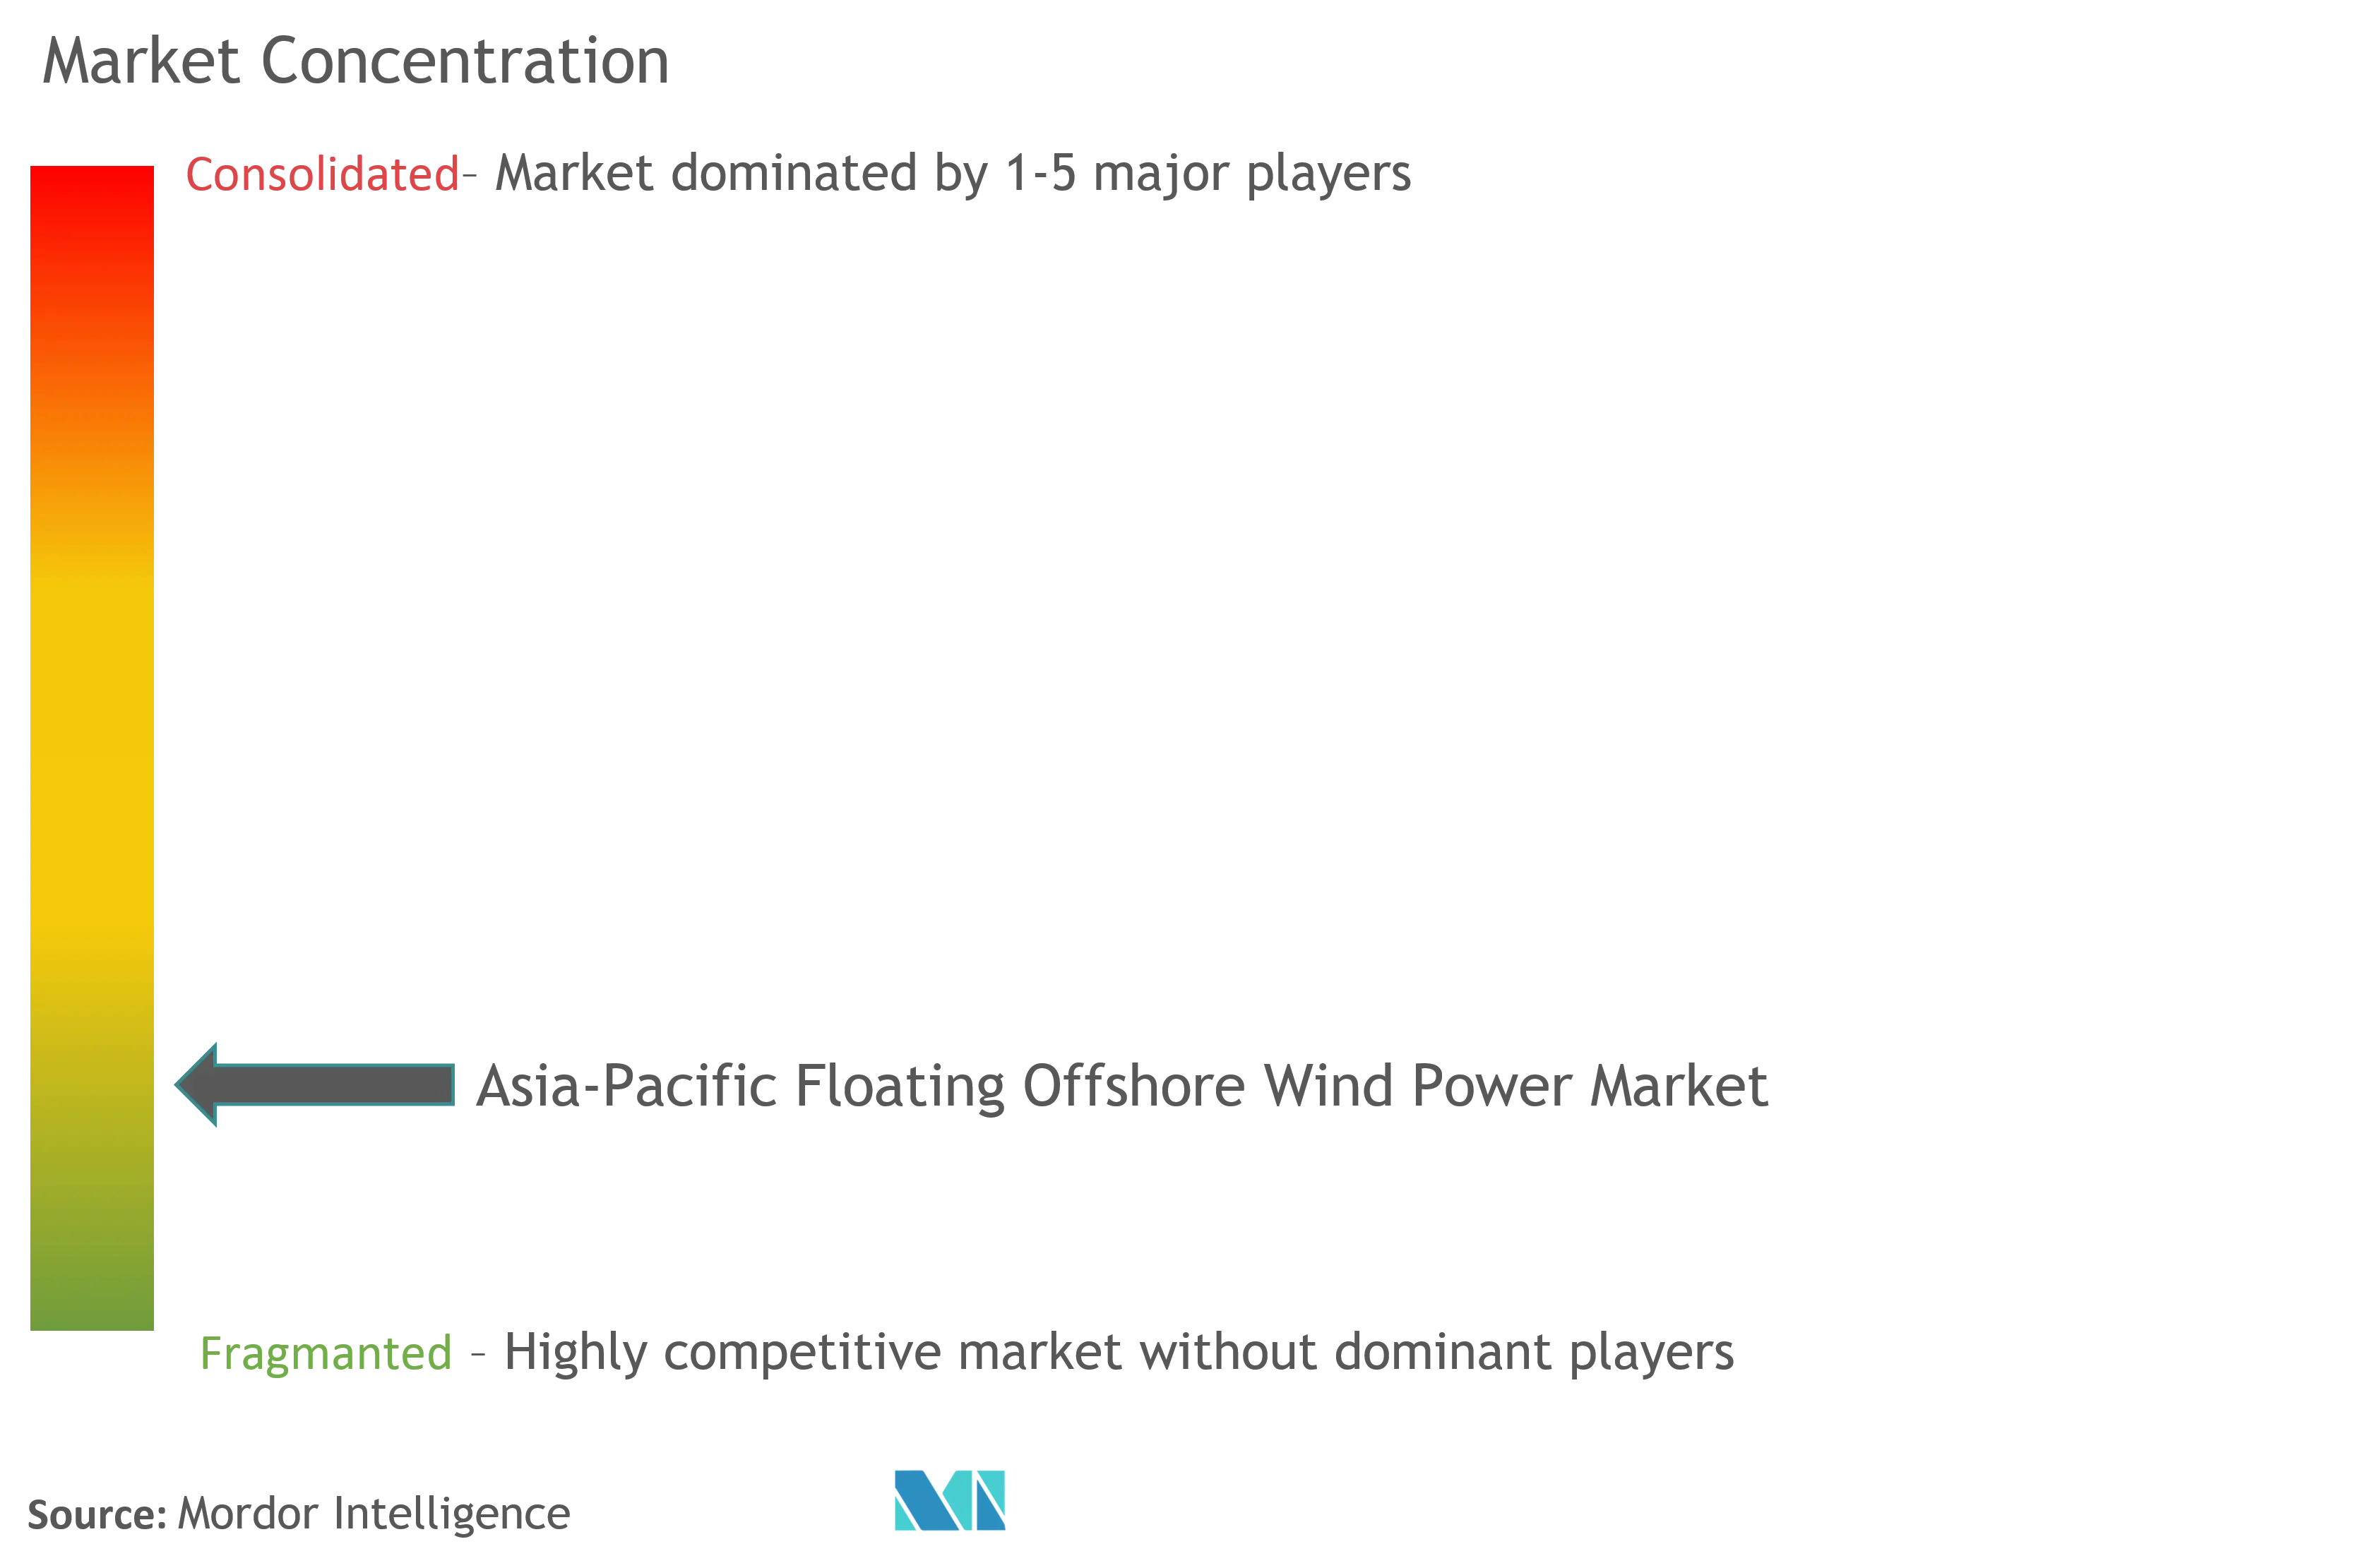 アジア太平洋浮体式洋上風力発電市場集中度